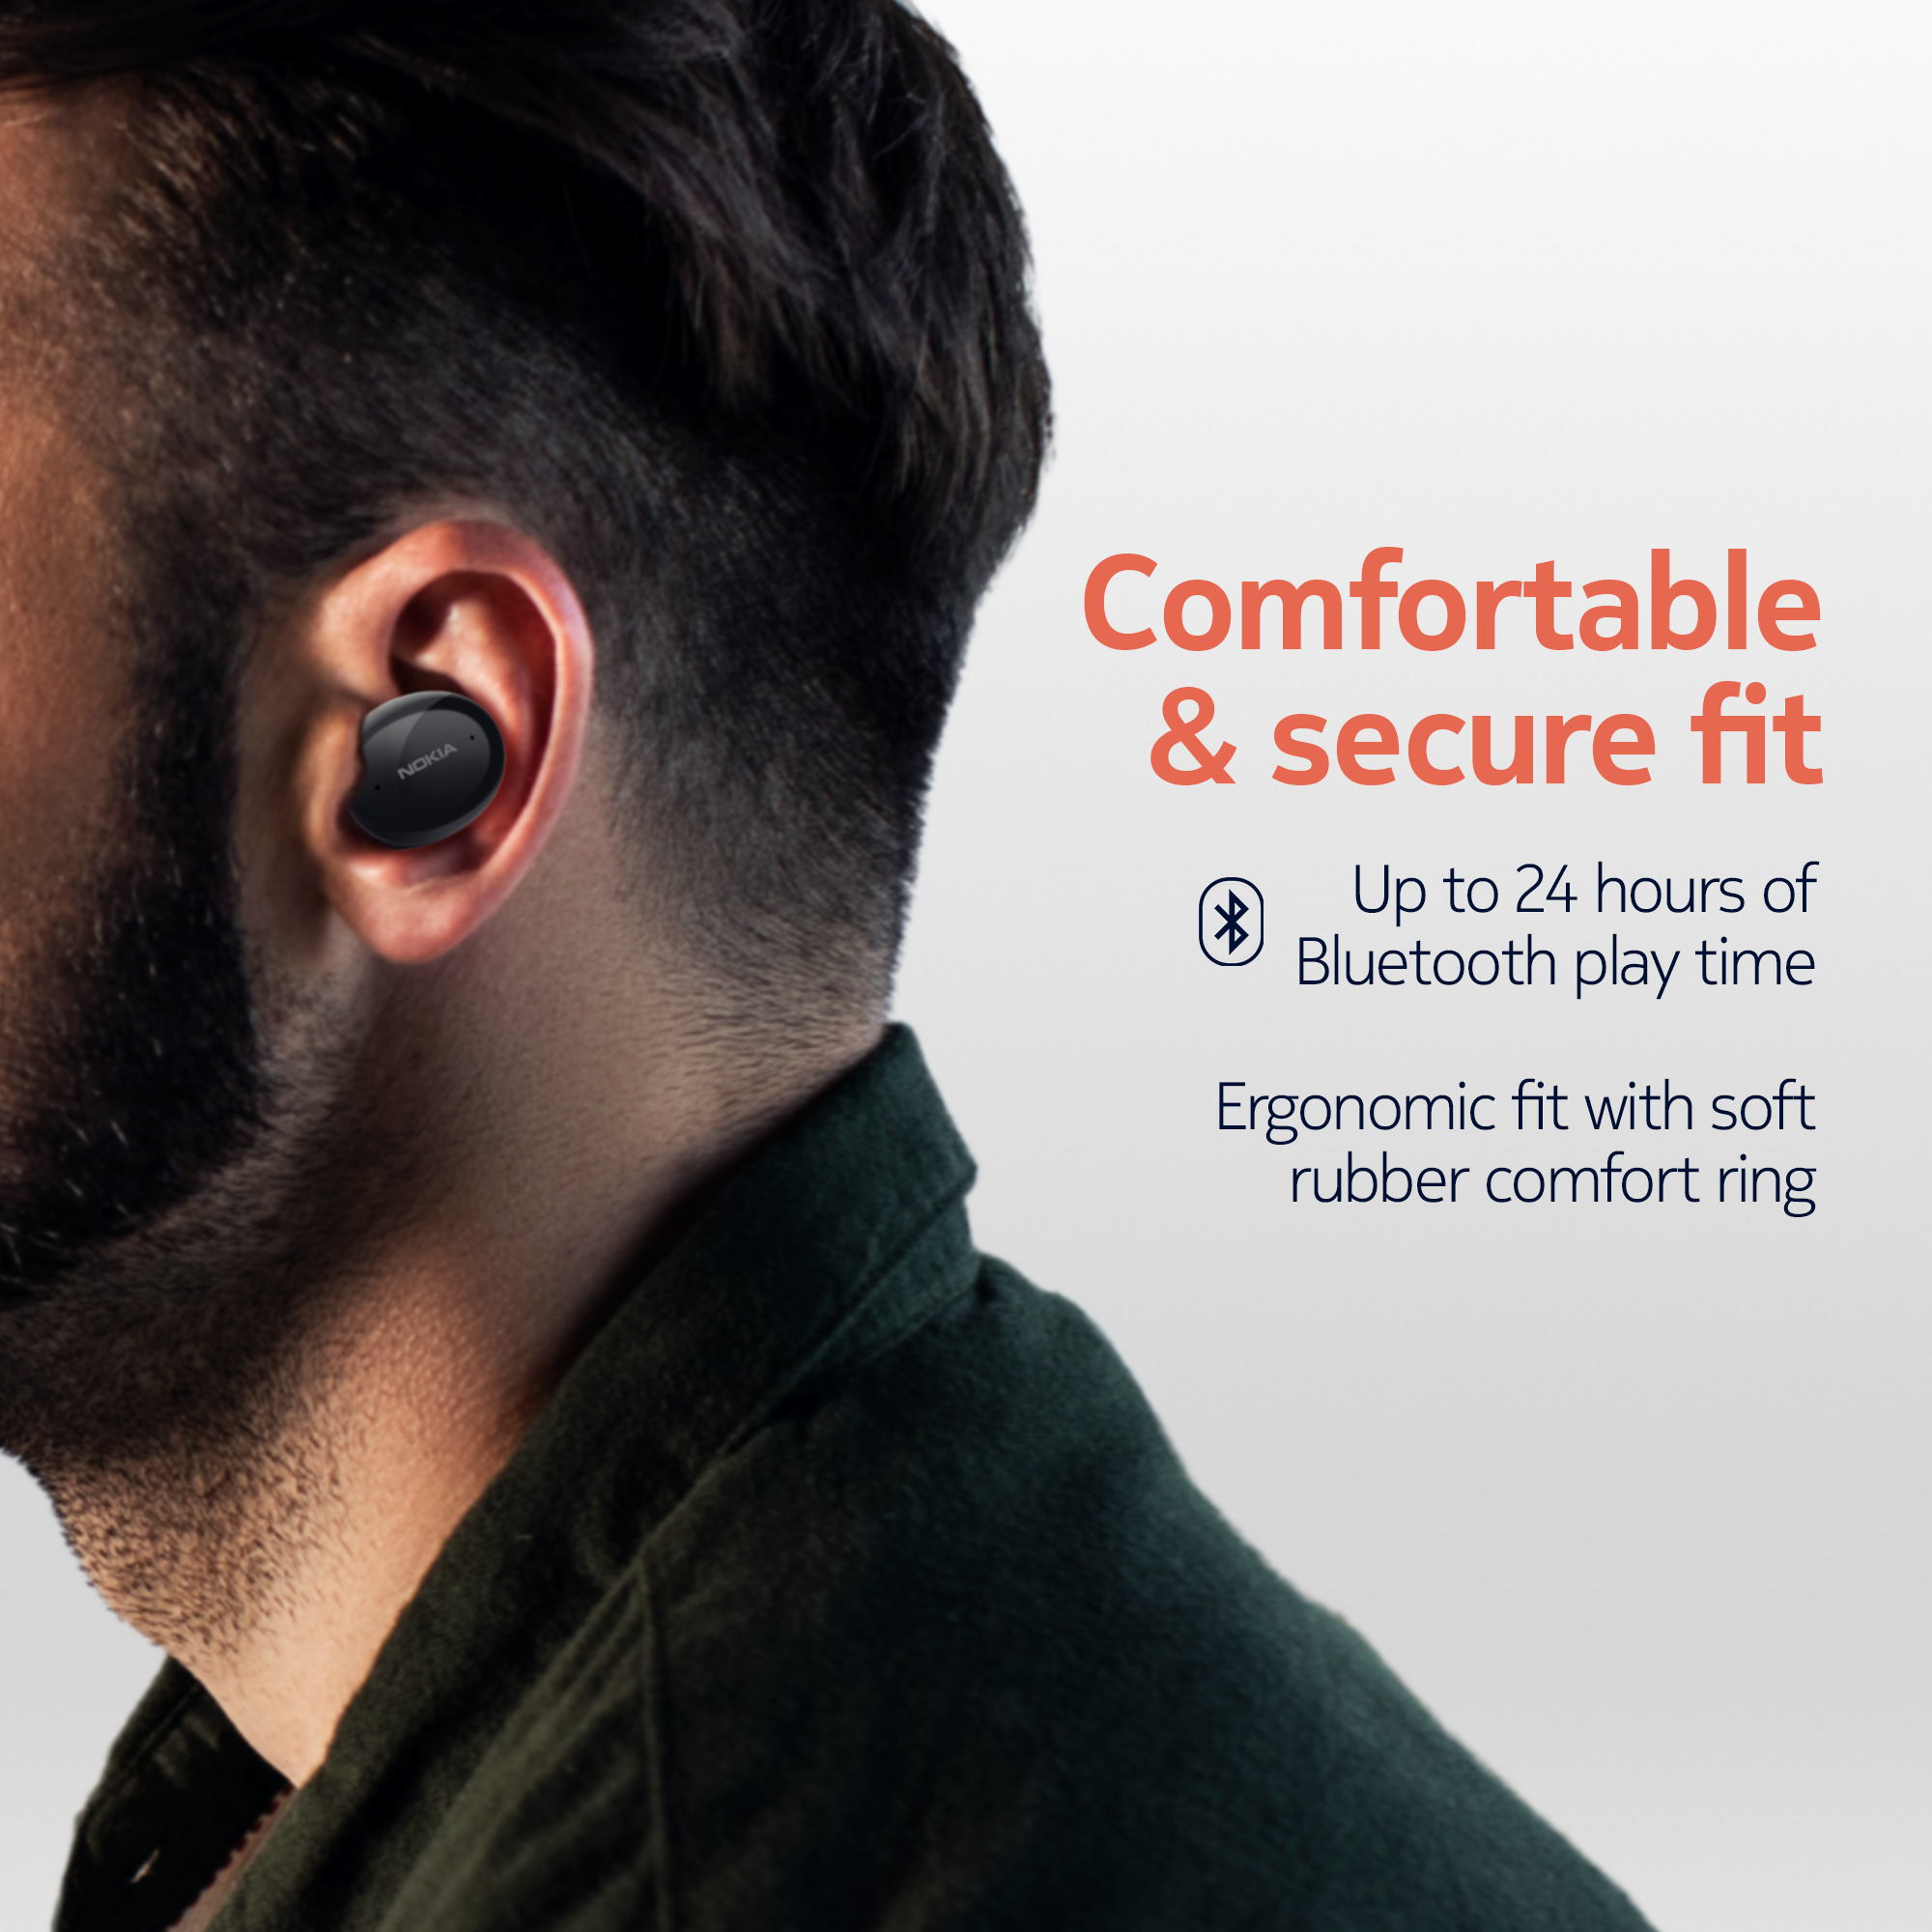 Nokia Comfort Earbuds+ TWS-411W, Waterproof True Wireless Headphones with Wireless Charging Case - CLEARANCE OFFER!